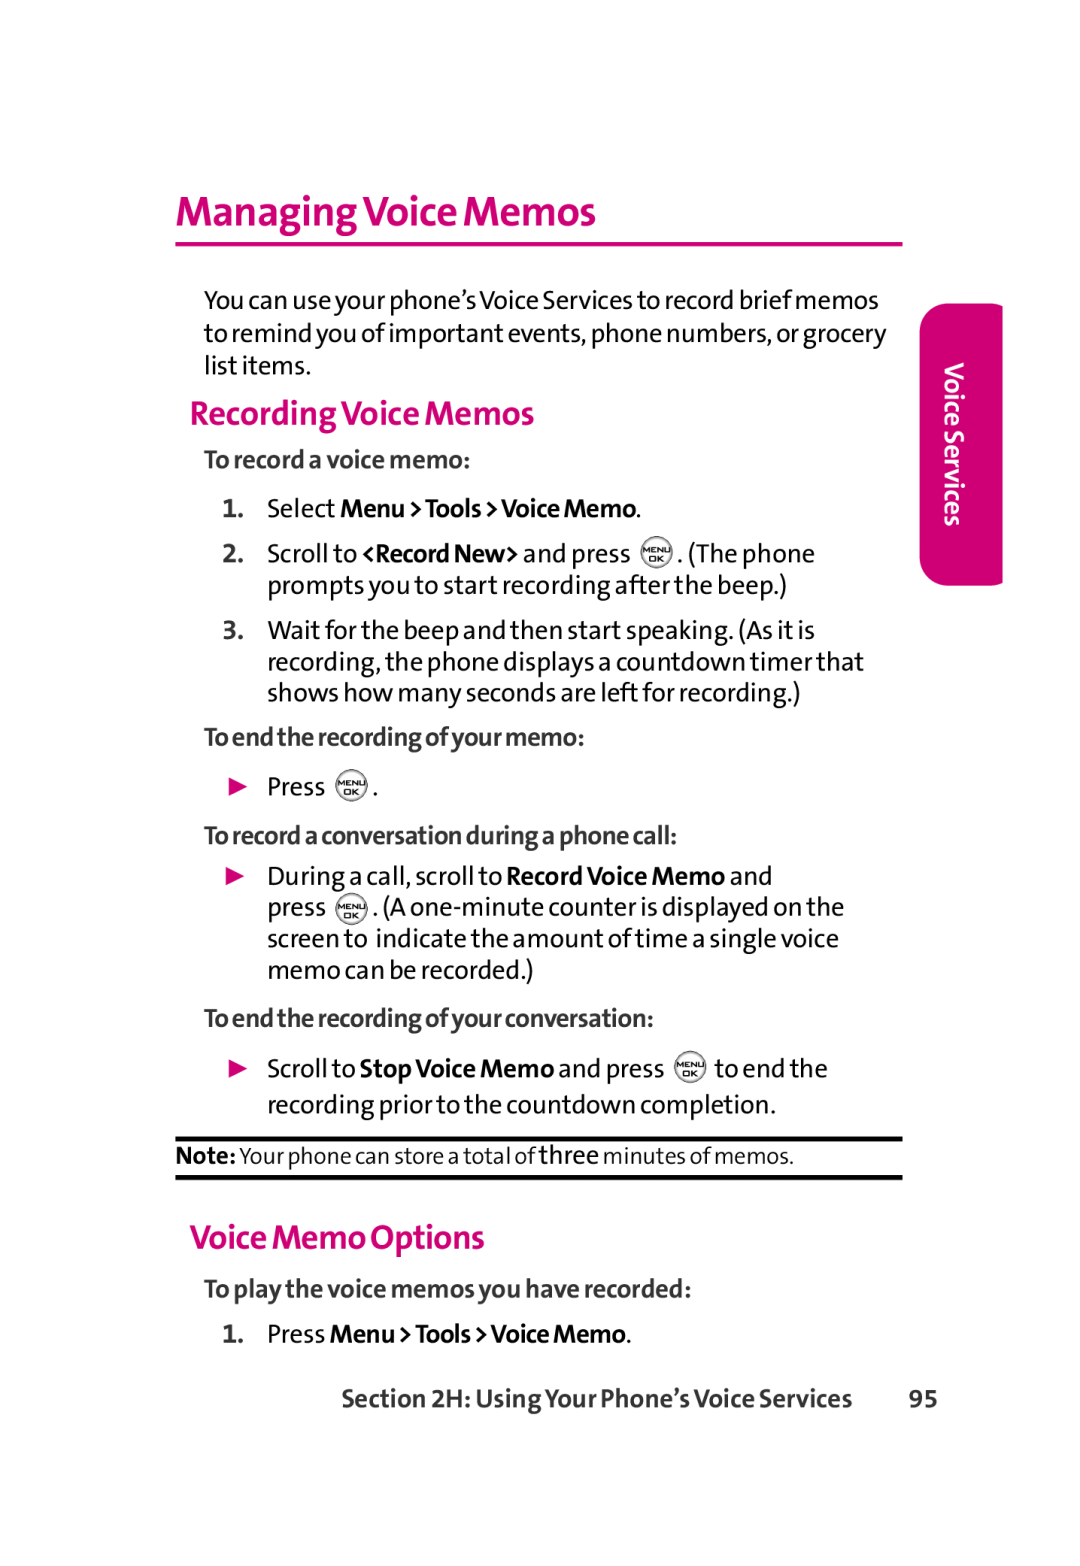 LG Electronics 350 Managing Voice Memos, Recording Voice Memos, Voice Memo Options, Voice Services, To record a voice memo 